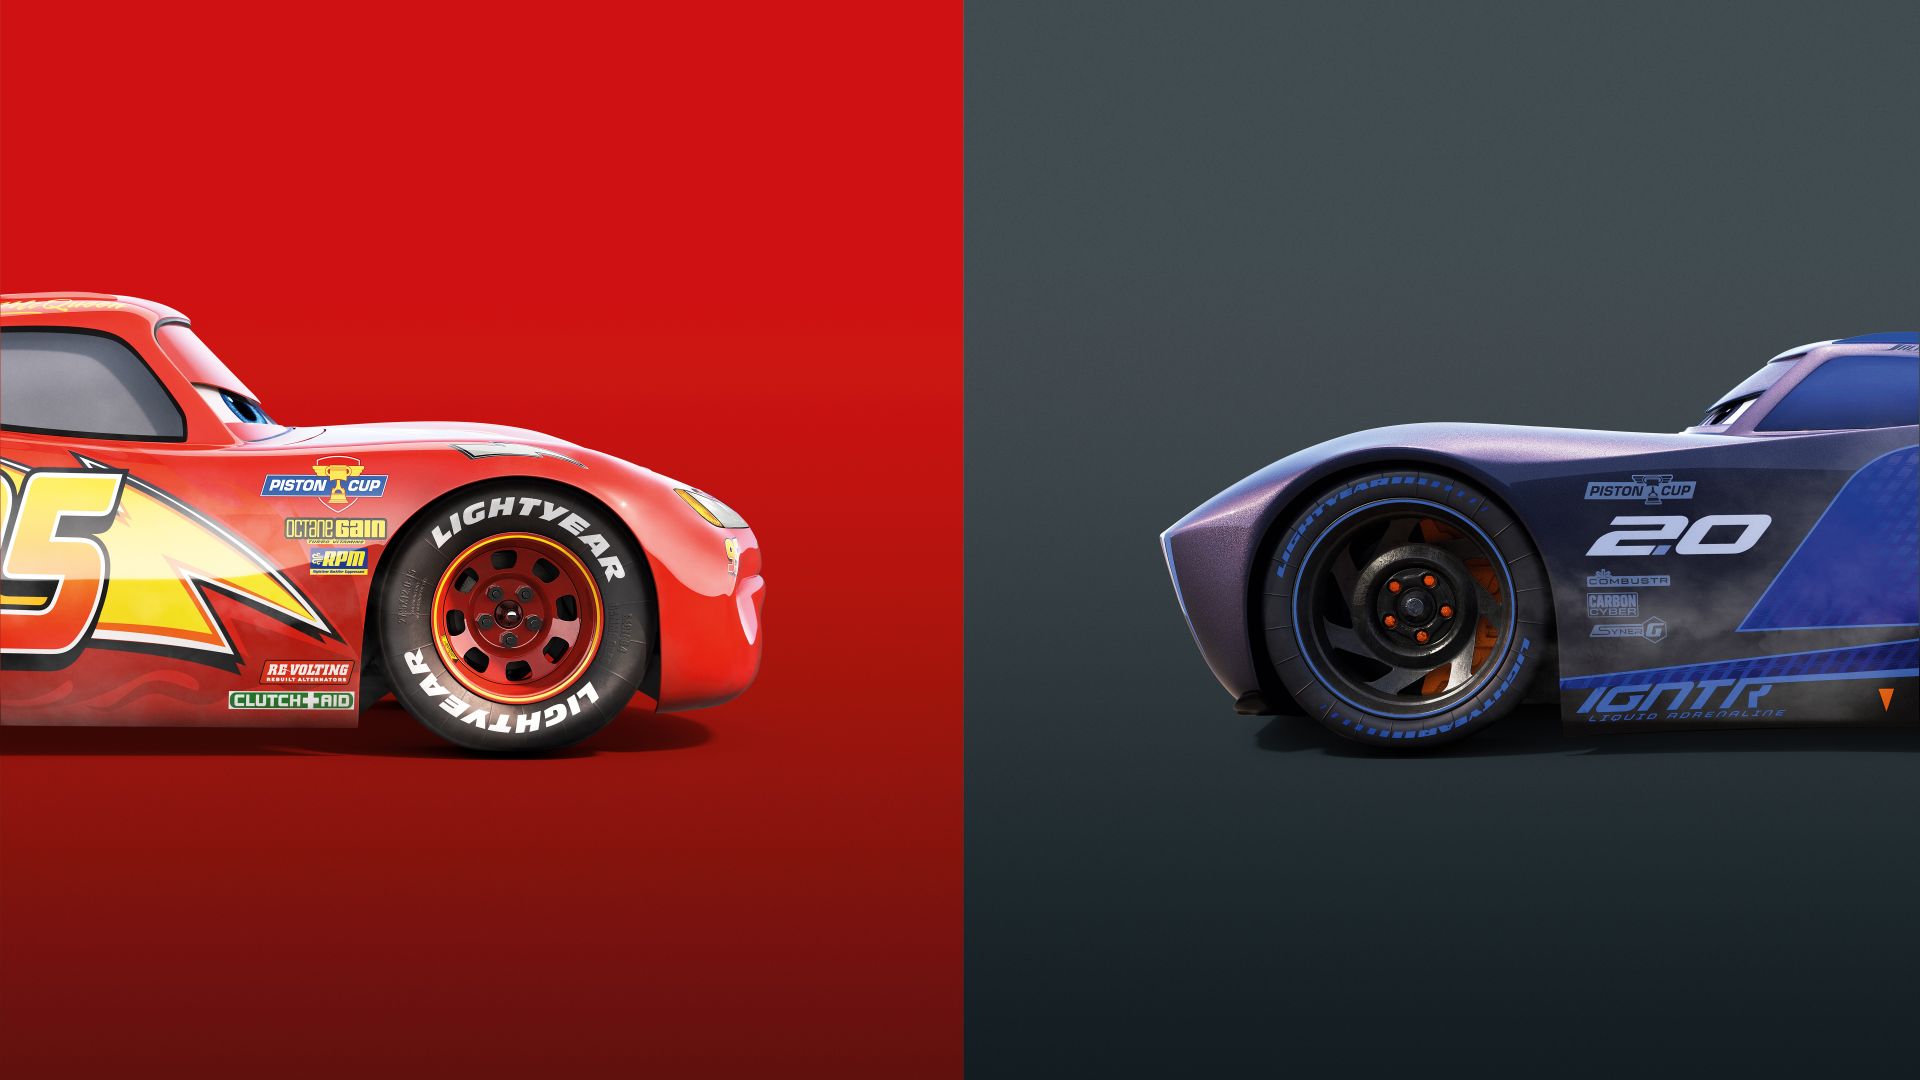 Тачки 3, Cars 3, 8k, Lightning McQueen, poster (horizontal)